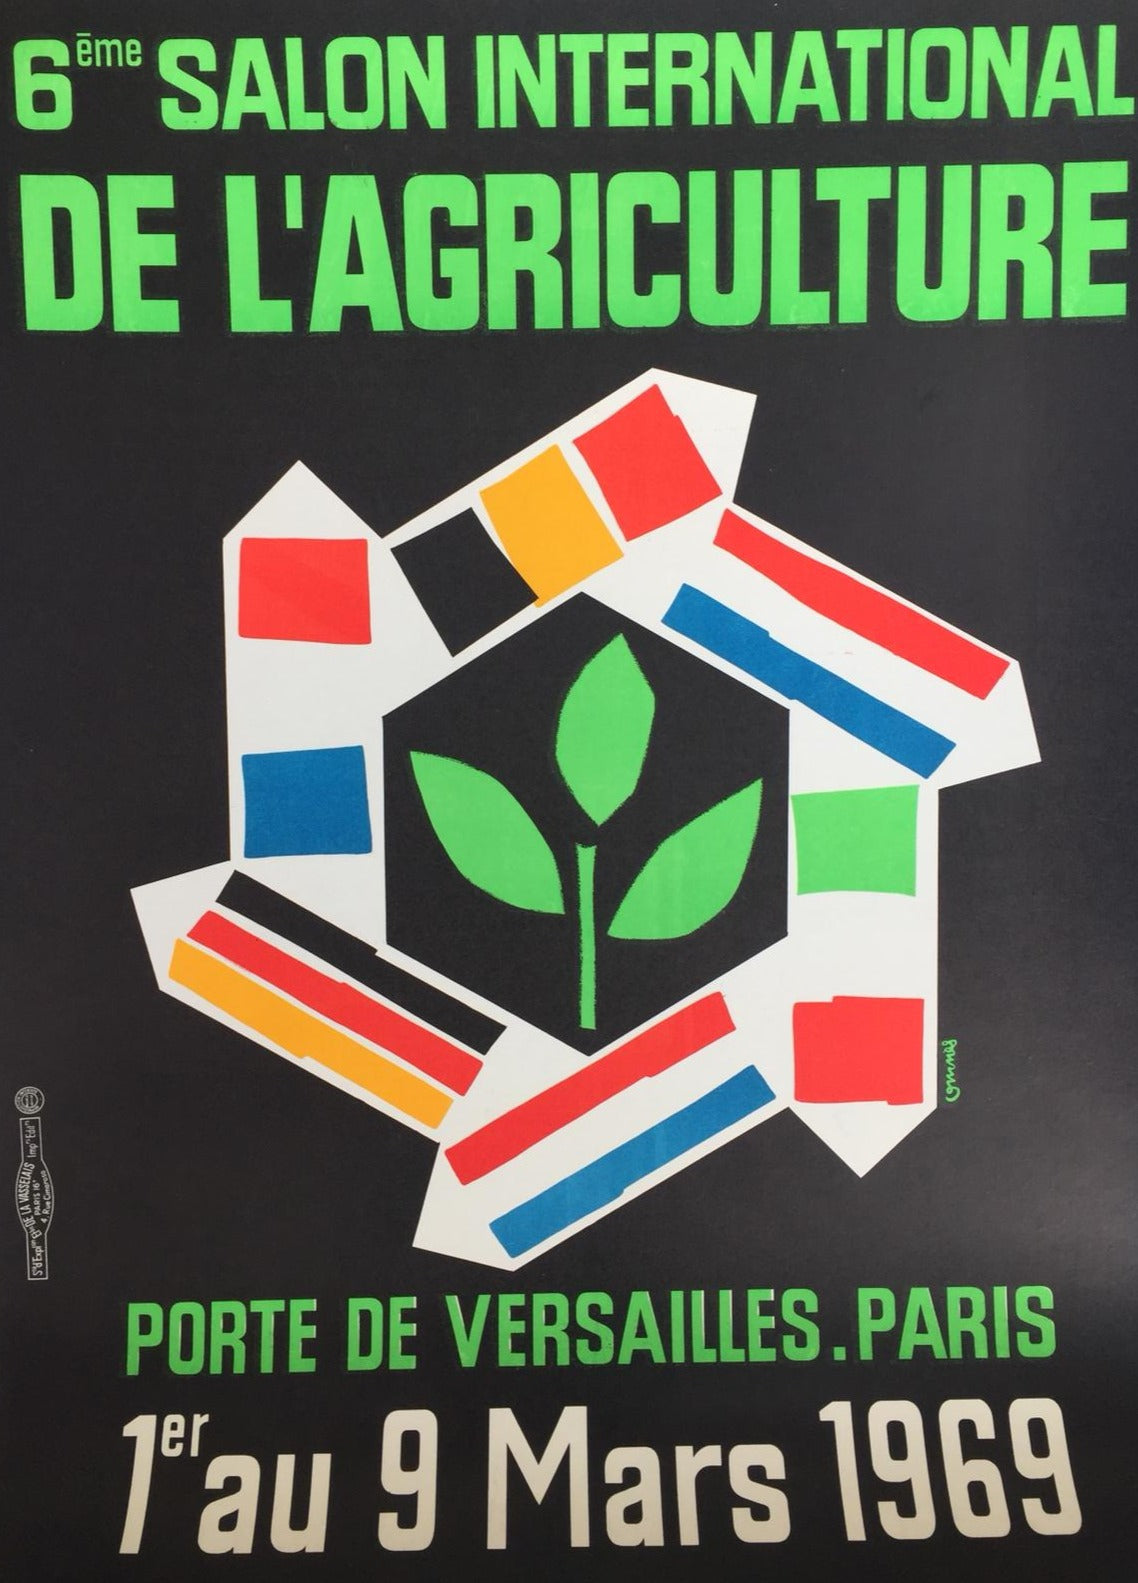 6th Salon International de L'agriculture